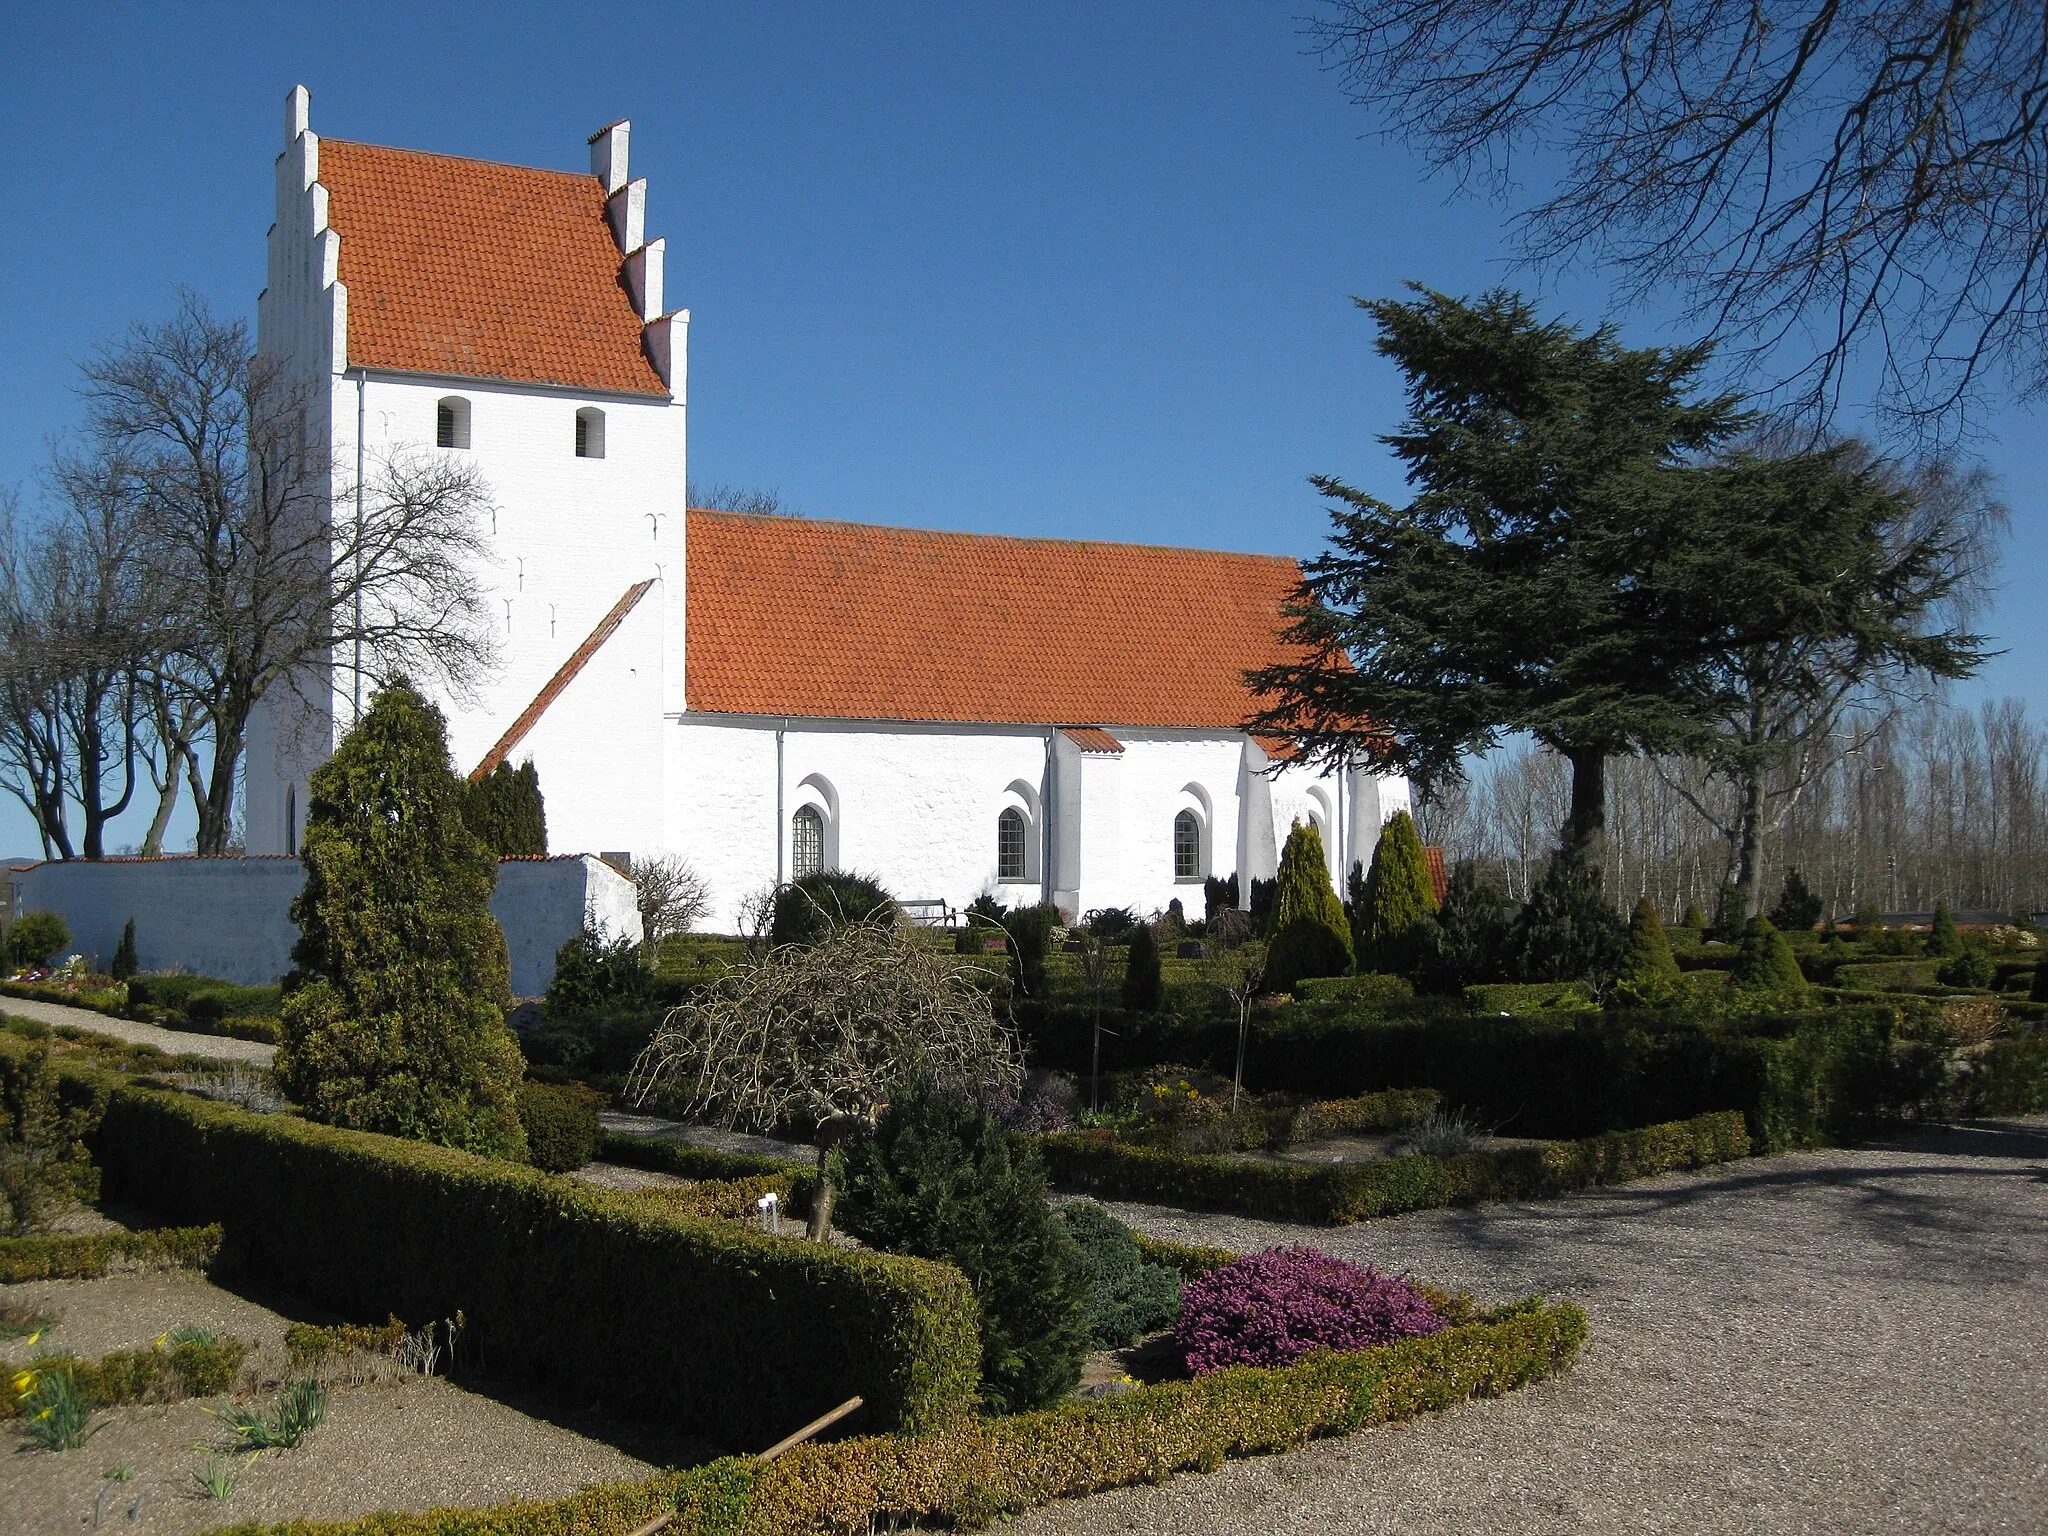 Photo showing: The church "Føllenslev Kirke" located in Kalundborg Municipality, West Zealand, Denmark.